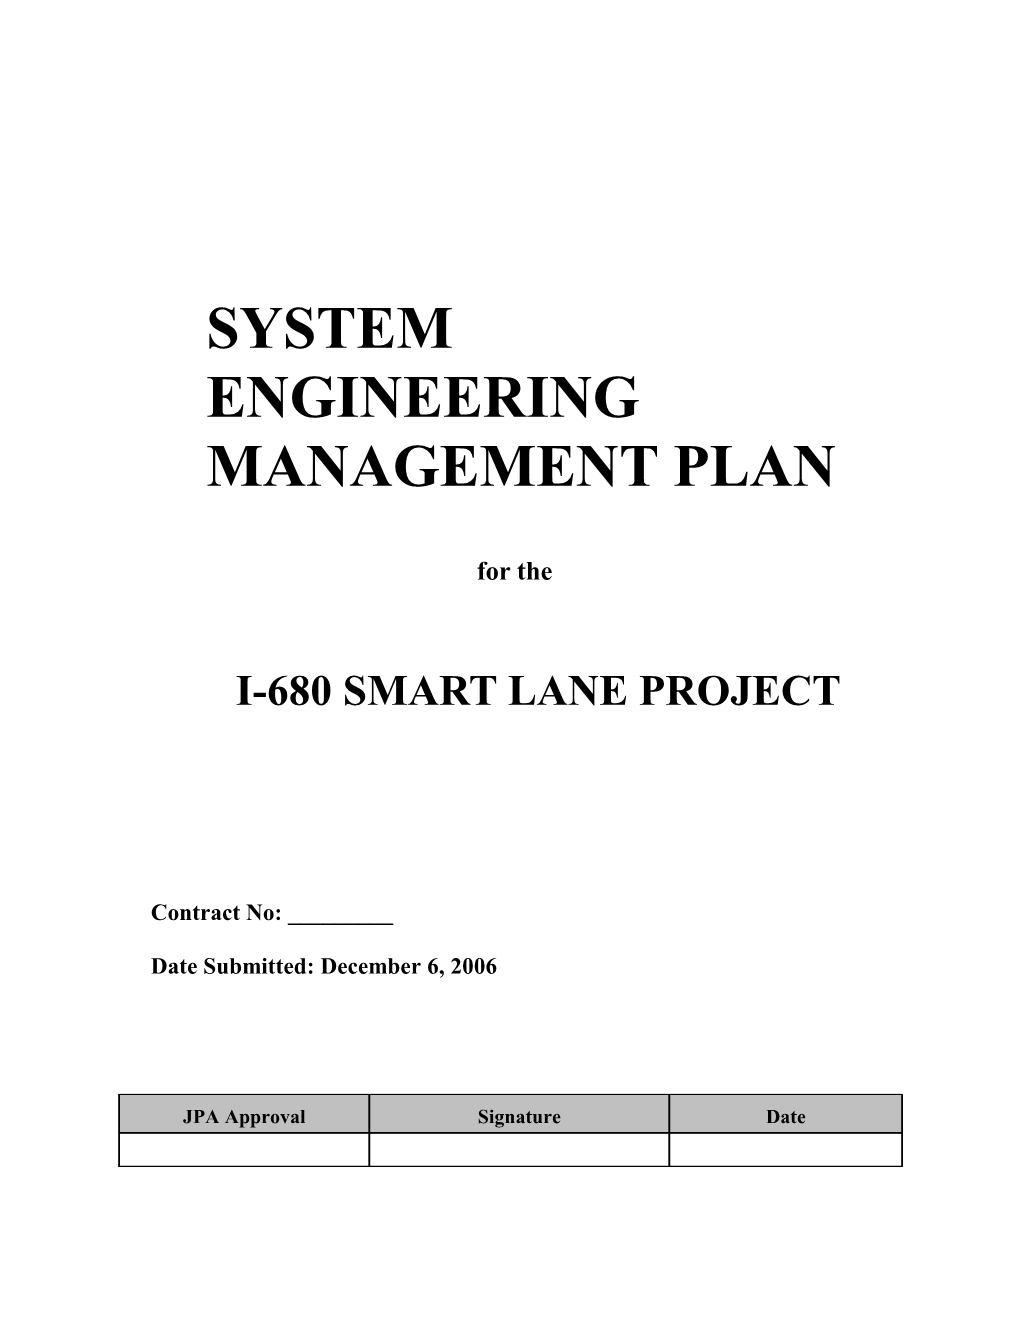 System Engineering Management Plan